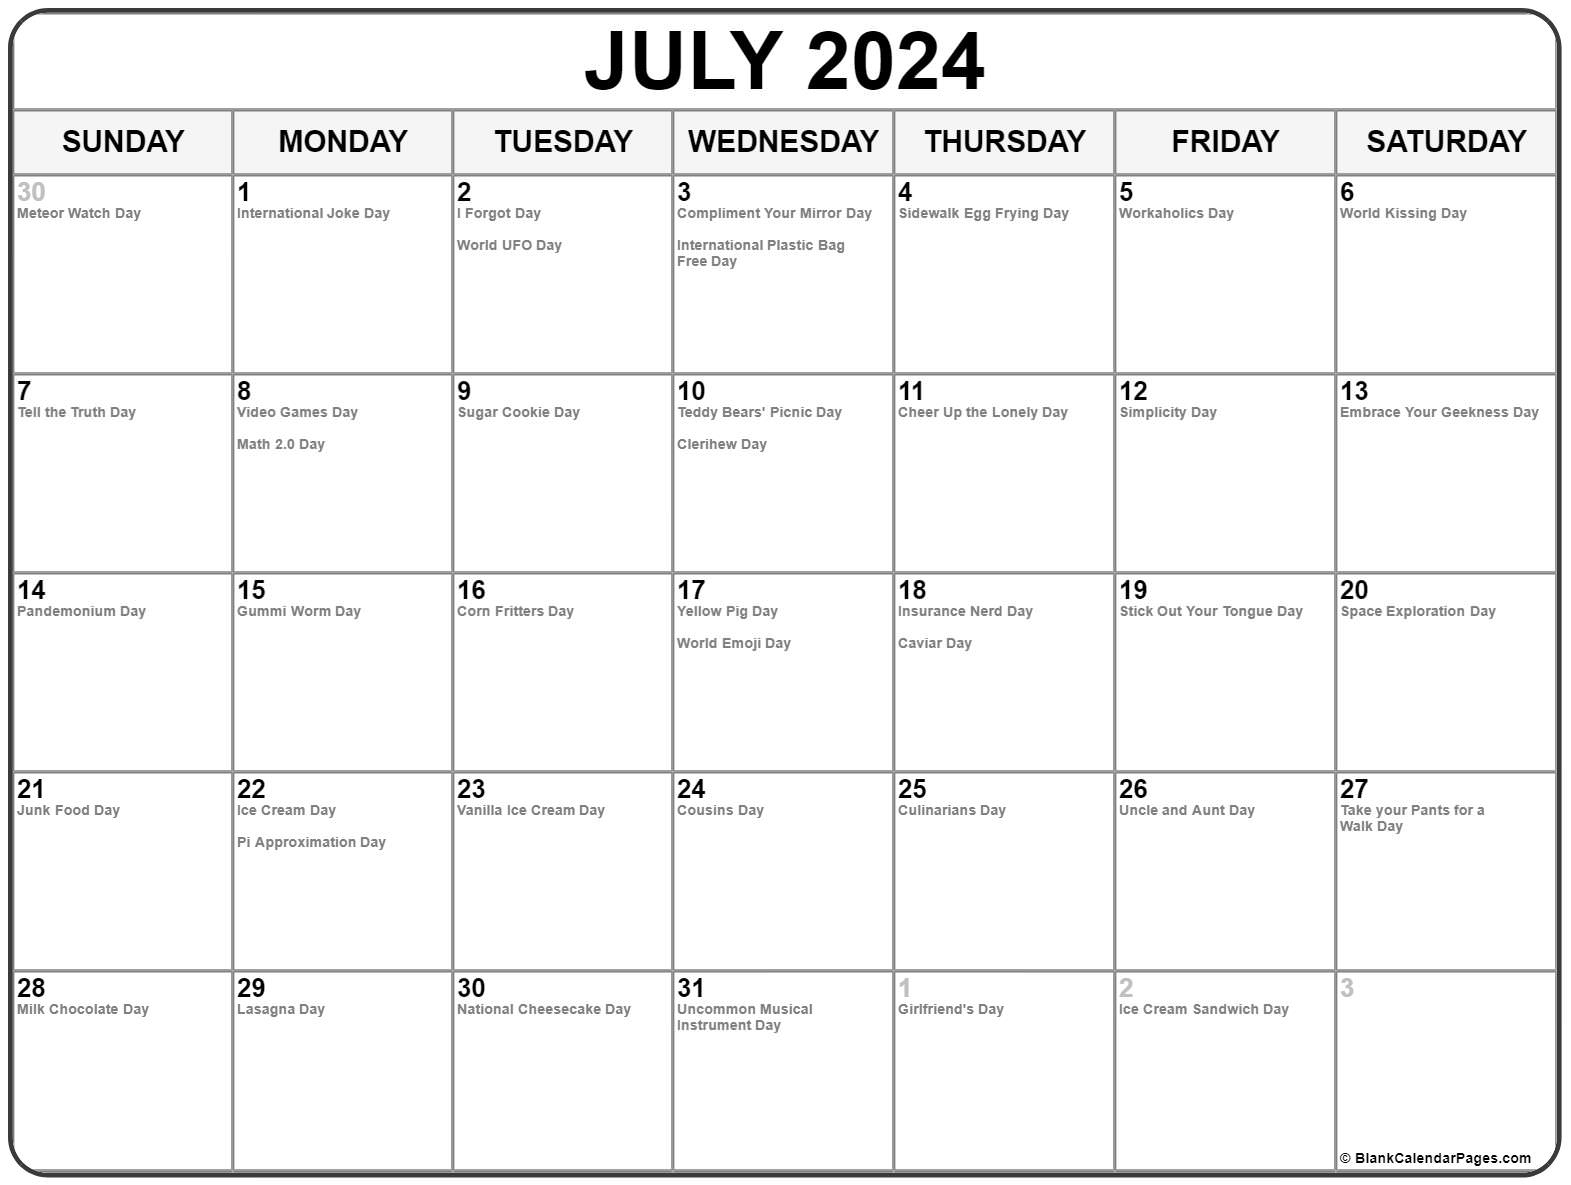 July 2024 With Holidays Calendar | National Calendar Day July 2024